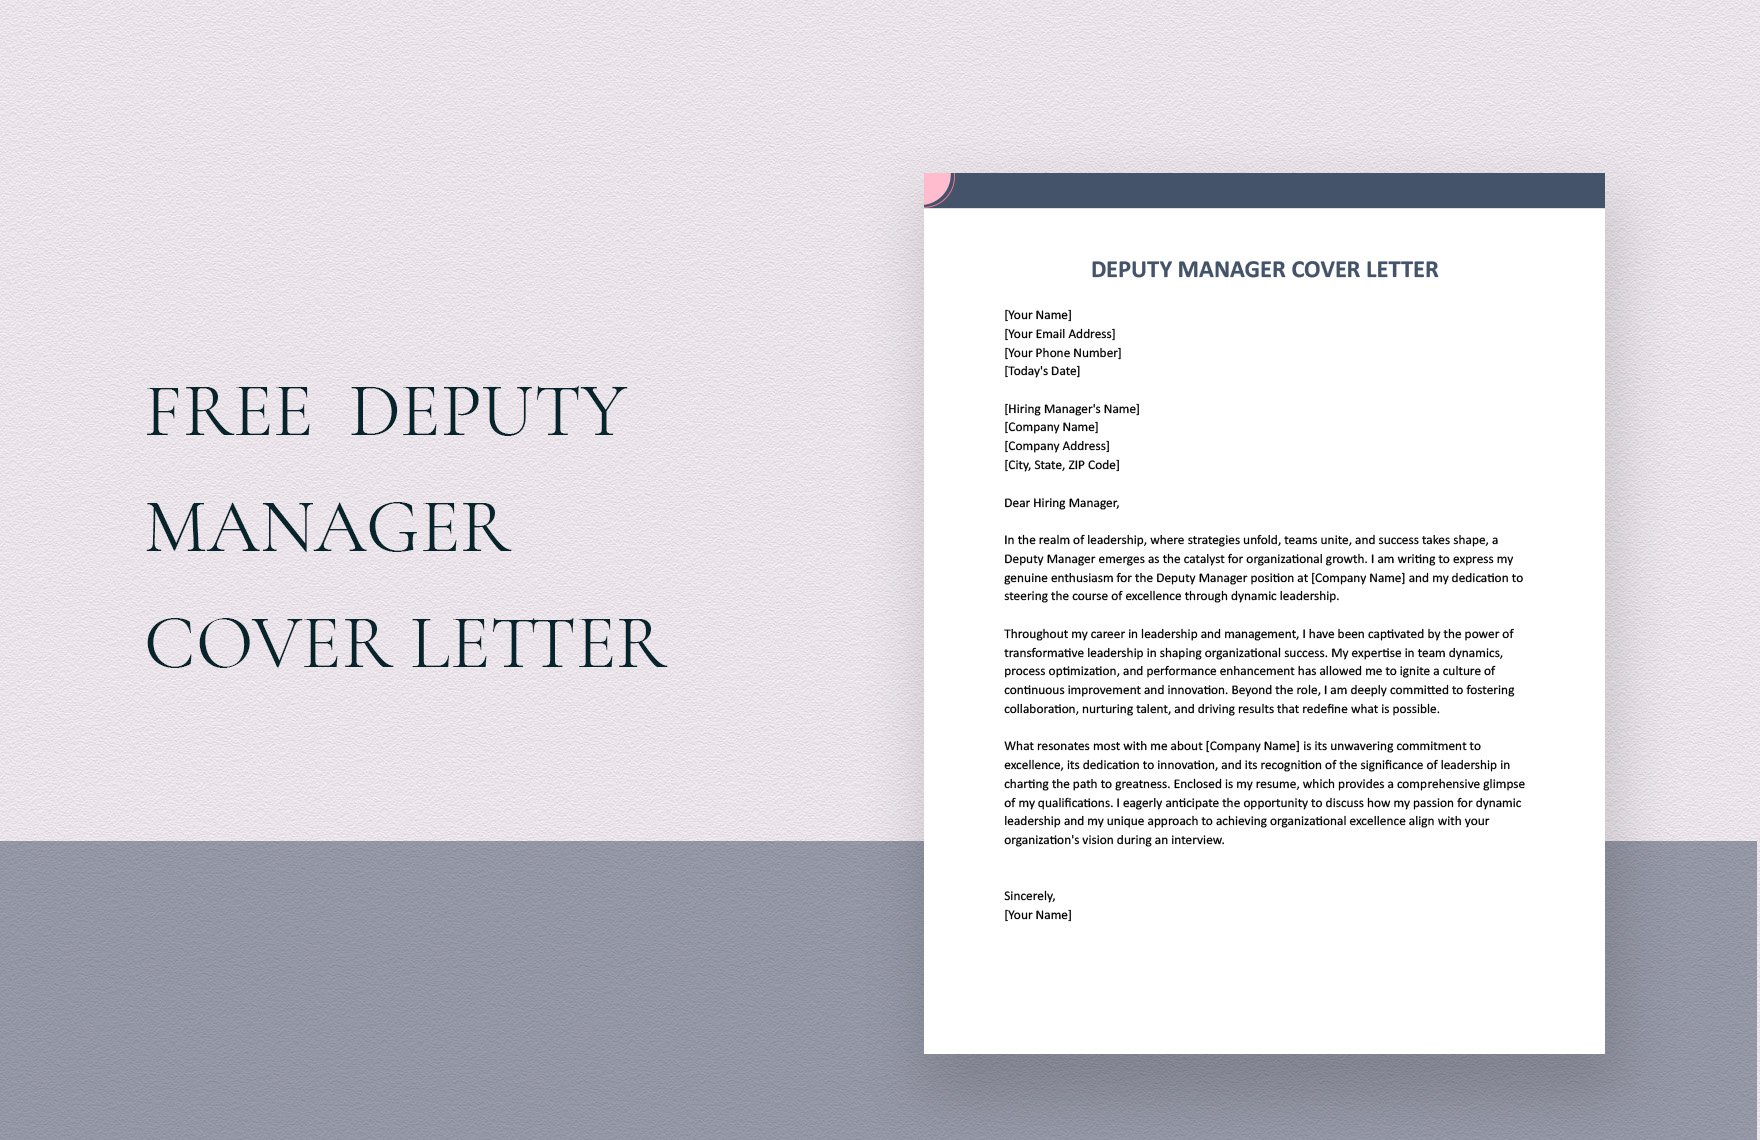 Deputy Manager Cover Letter